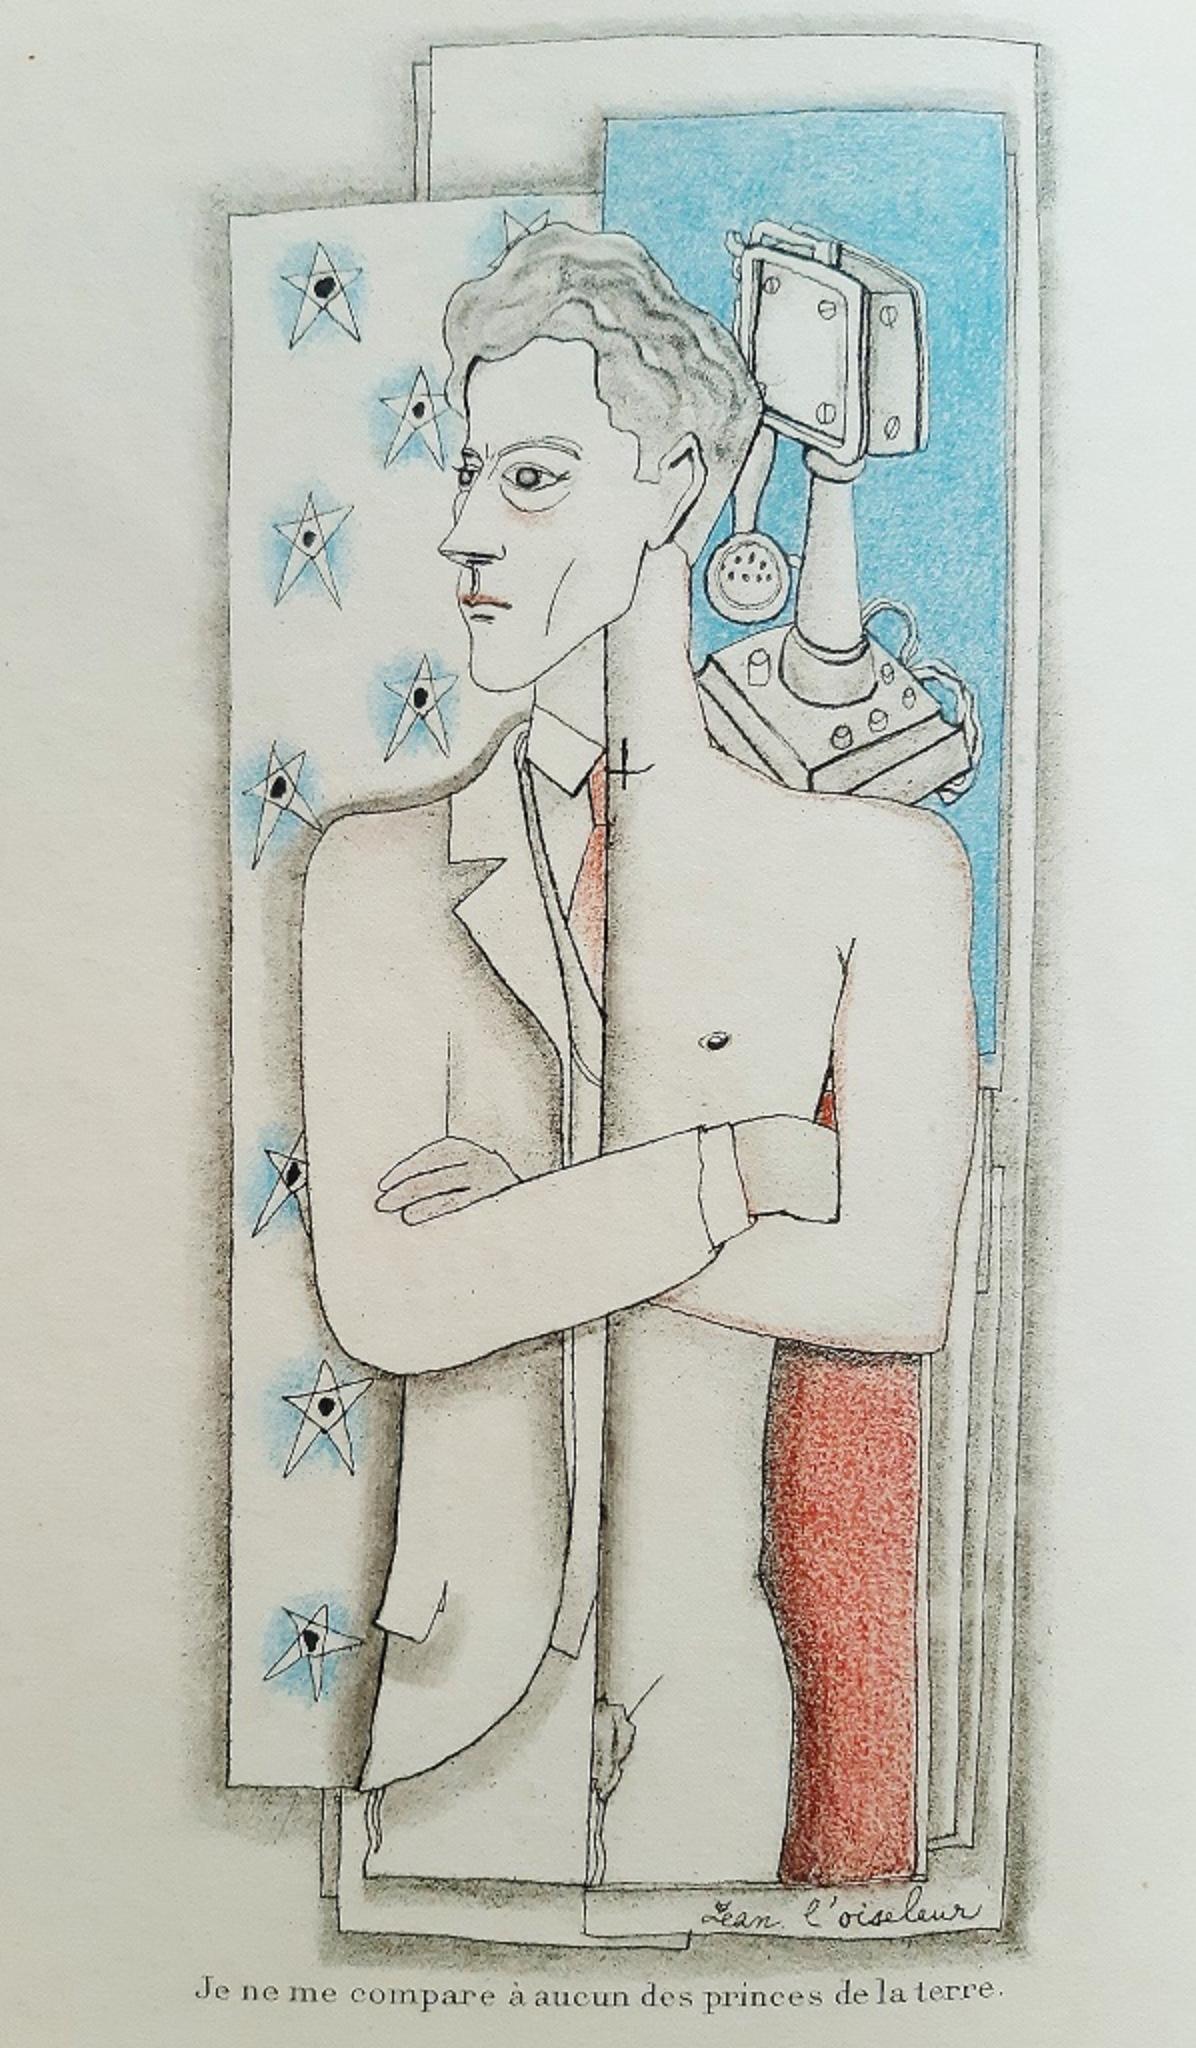 Le Secret Professionnel is an original modern rare book illustrated by Jean Cocteau (Maisons-Laffitte, 1889 – Milly-la-Forêt, 1963) in 1925.

Published by Au Sens Pareil, Paris.

Original Edition.

530 numbered copies, one of the 440 copies on vélin